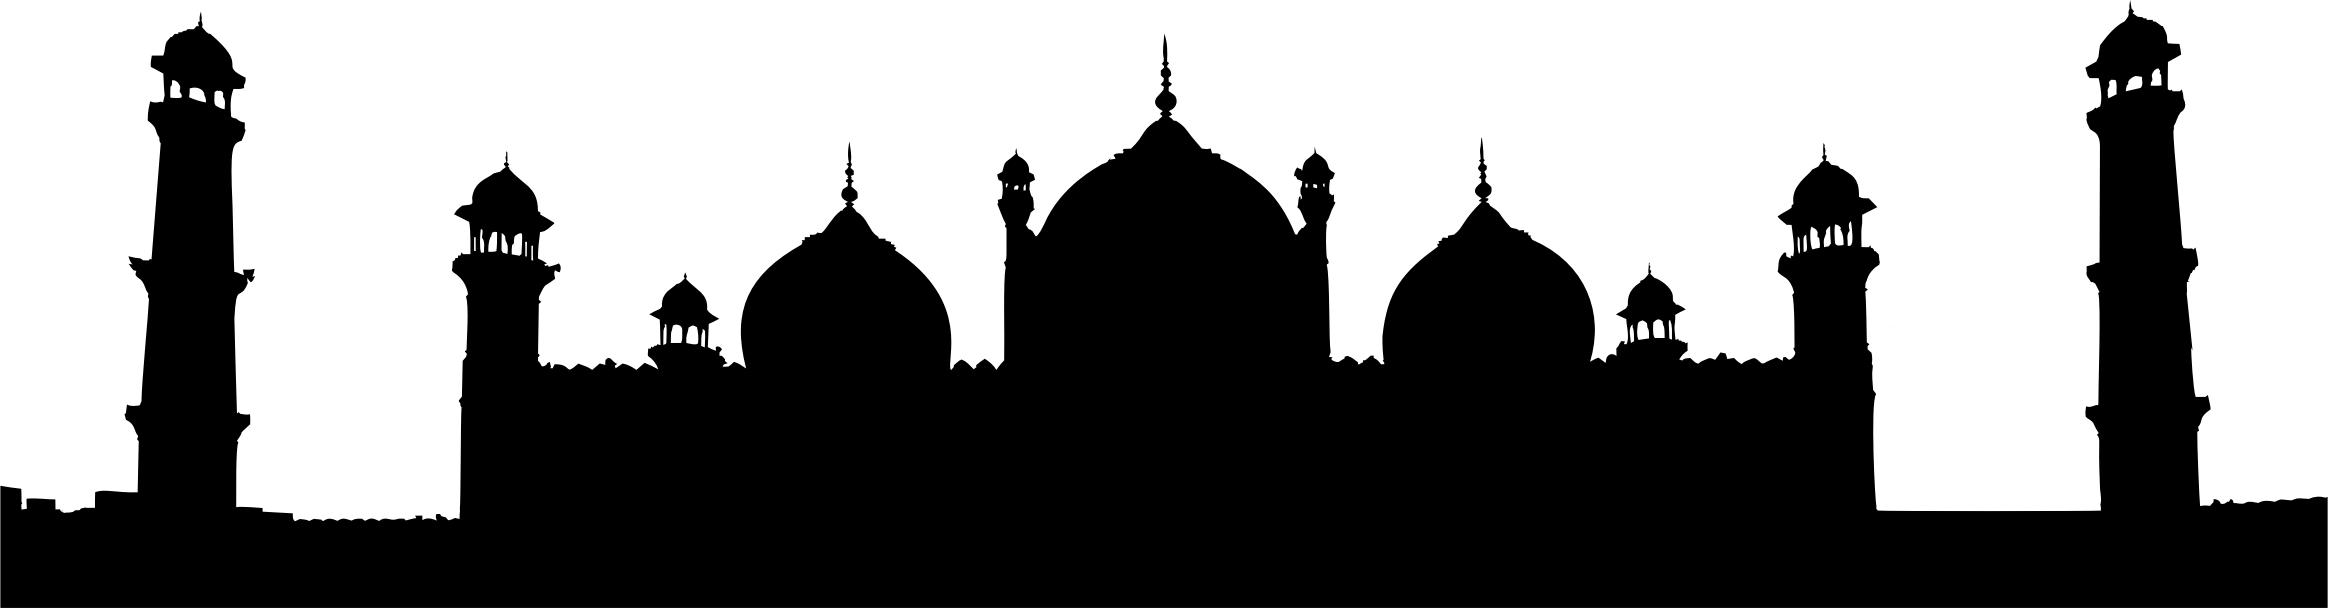 Мечеть в Самарканде силуэт